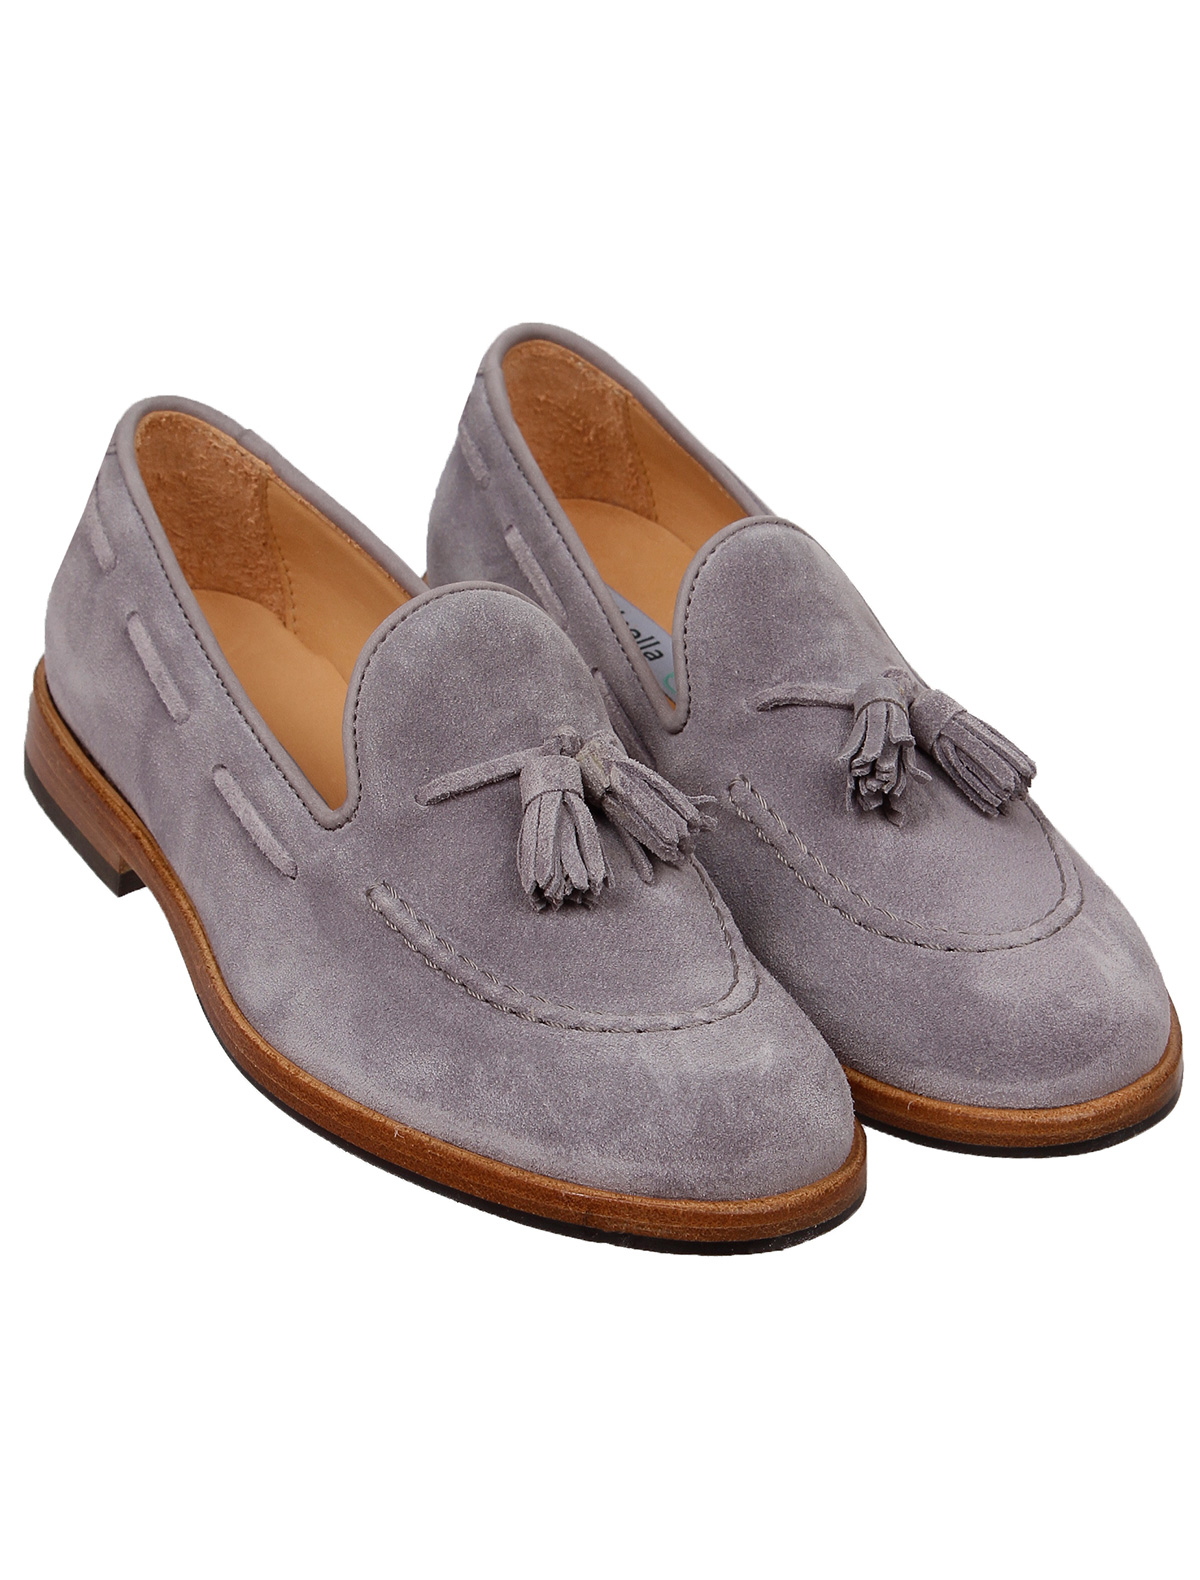 Туфли RONDINELLA 2413006, цвет серый, размер 31